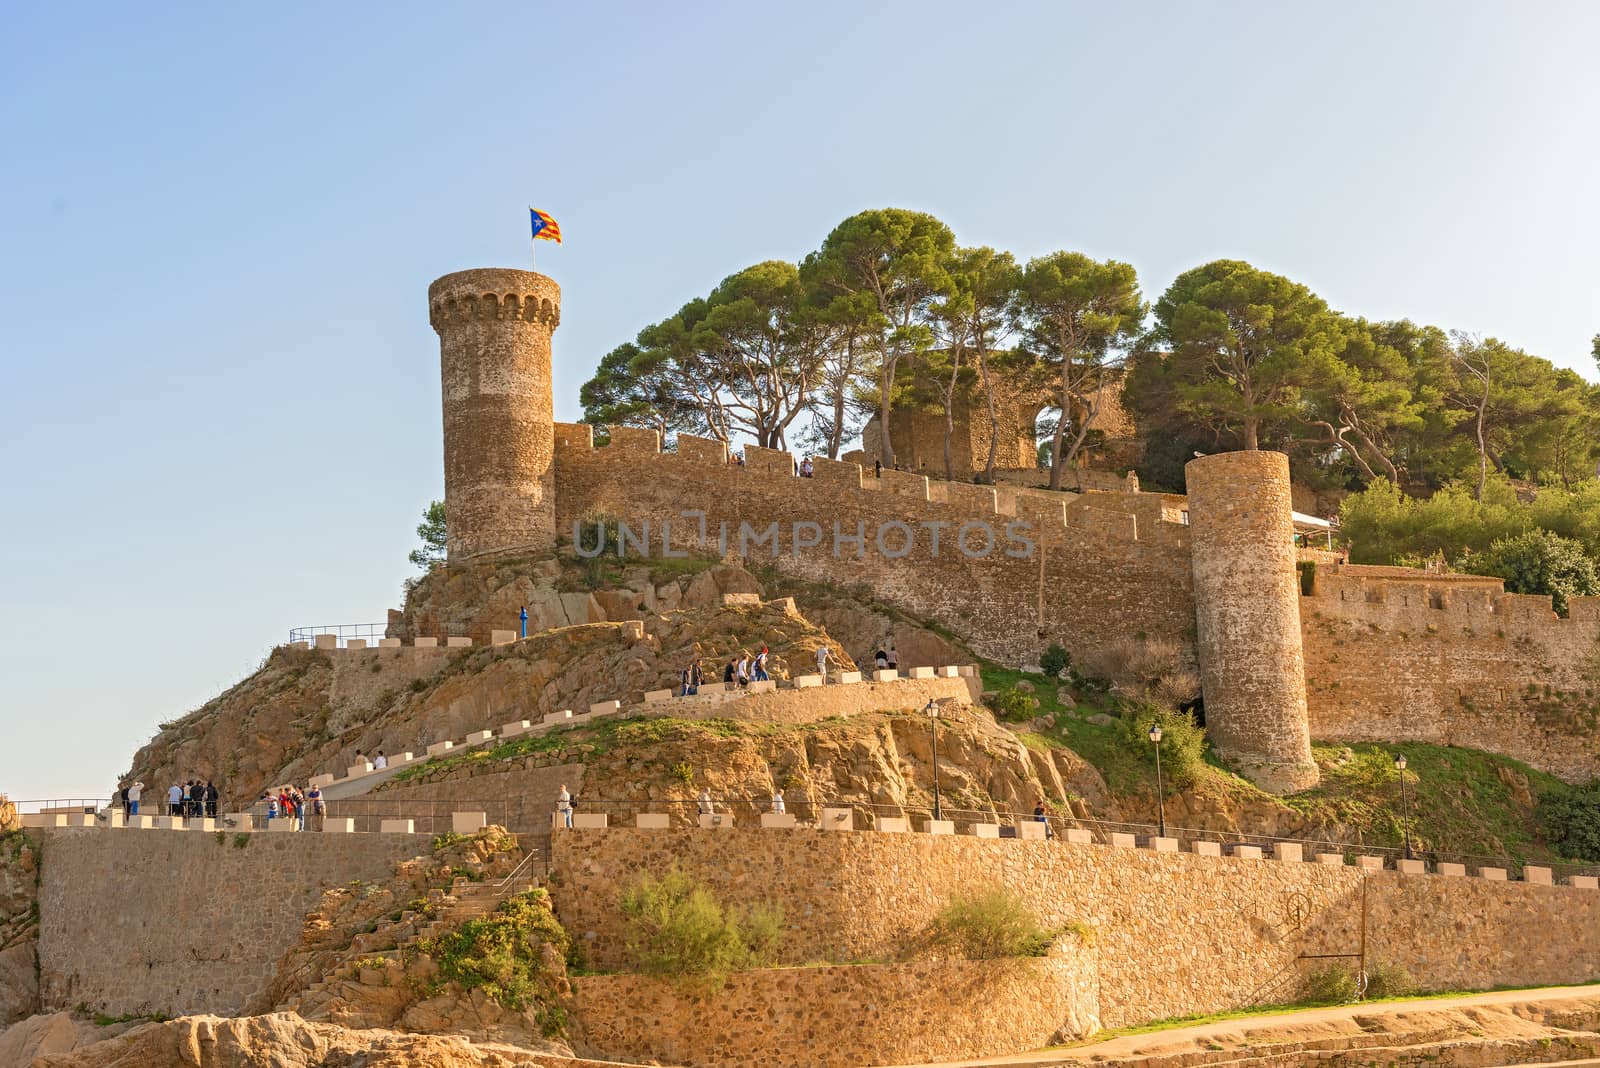 Medieval castle in Tossa de Mar, Spain by Marcus